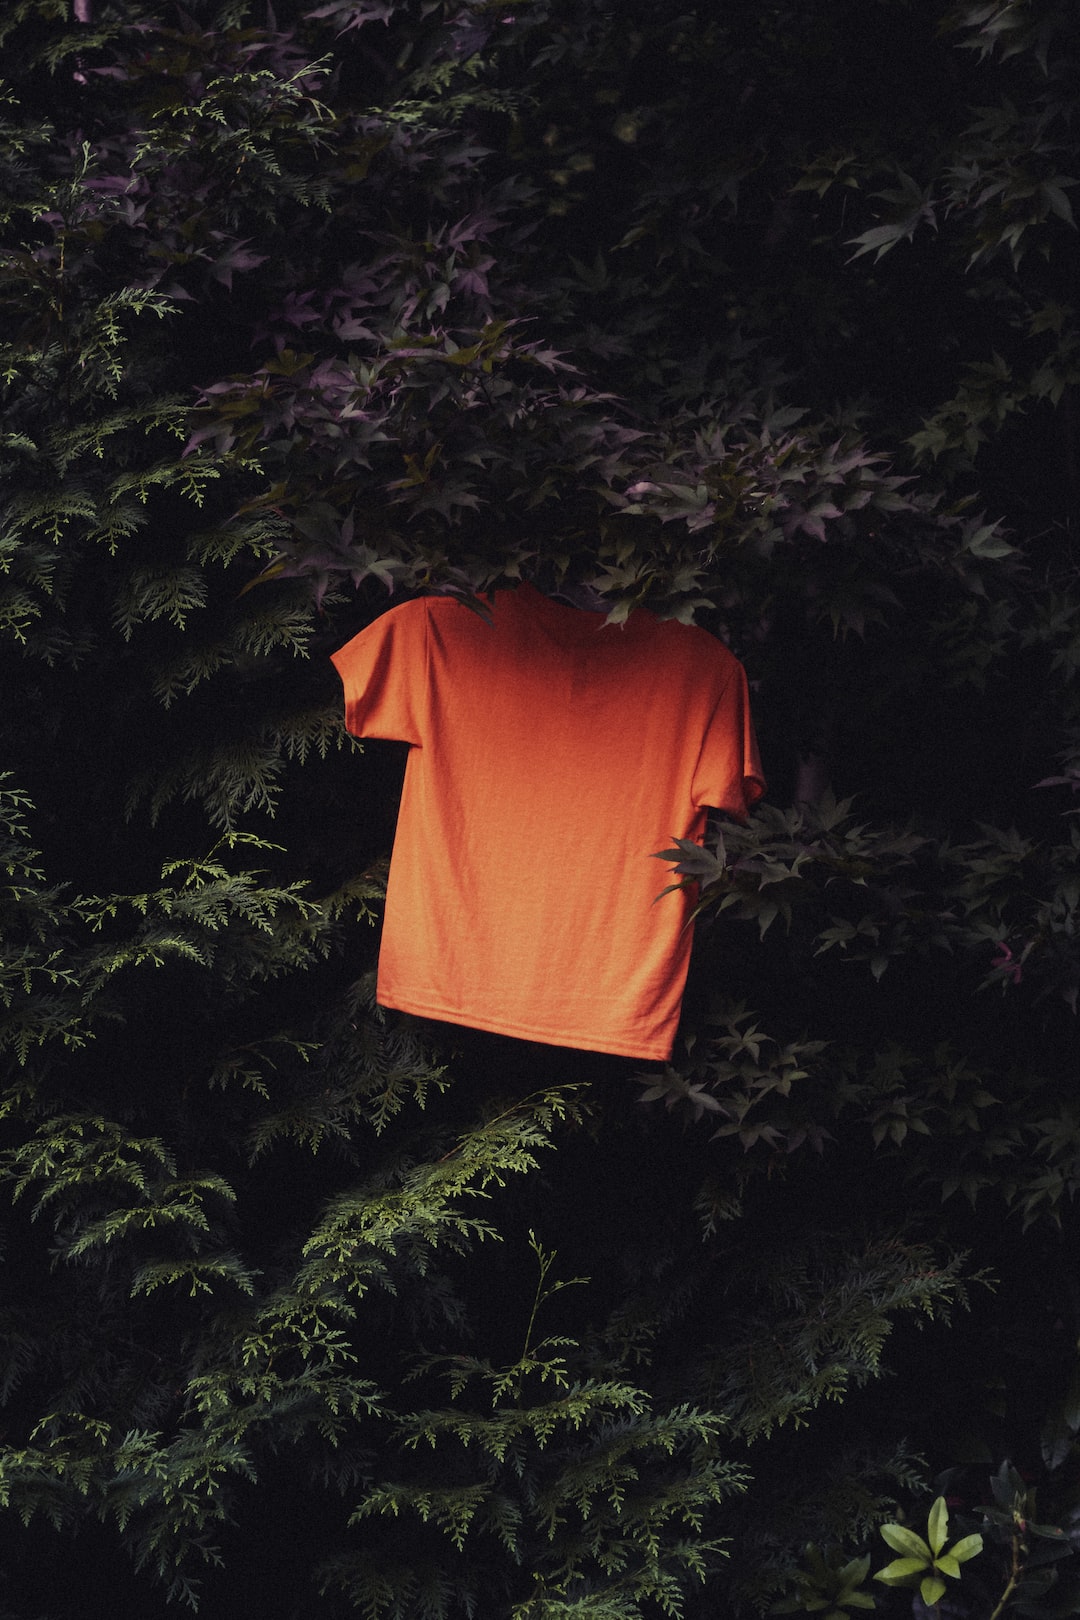 an orange t - shirt hanging on a tree branch